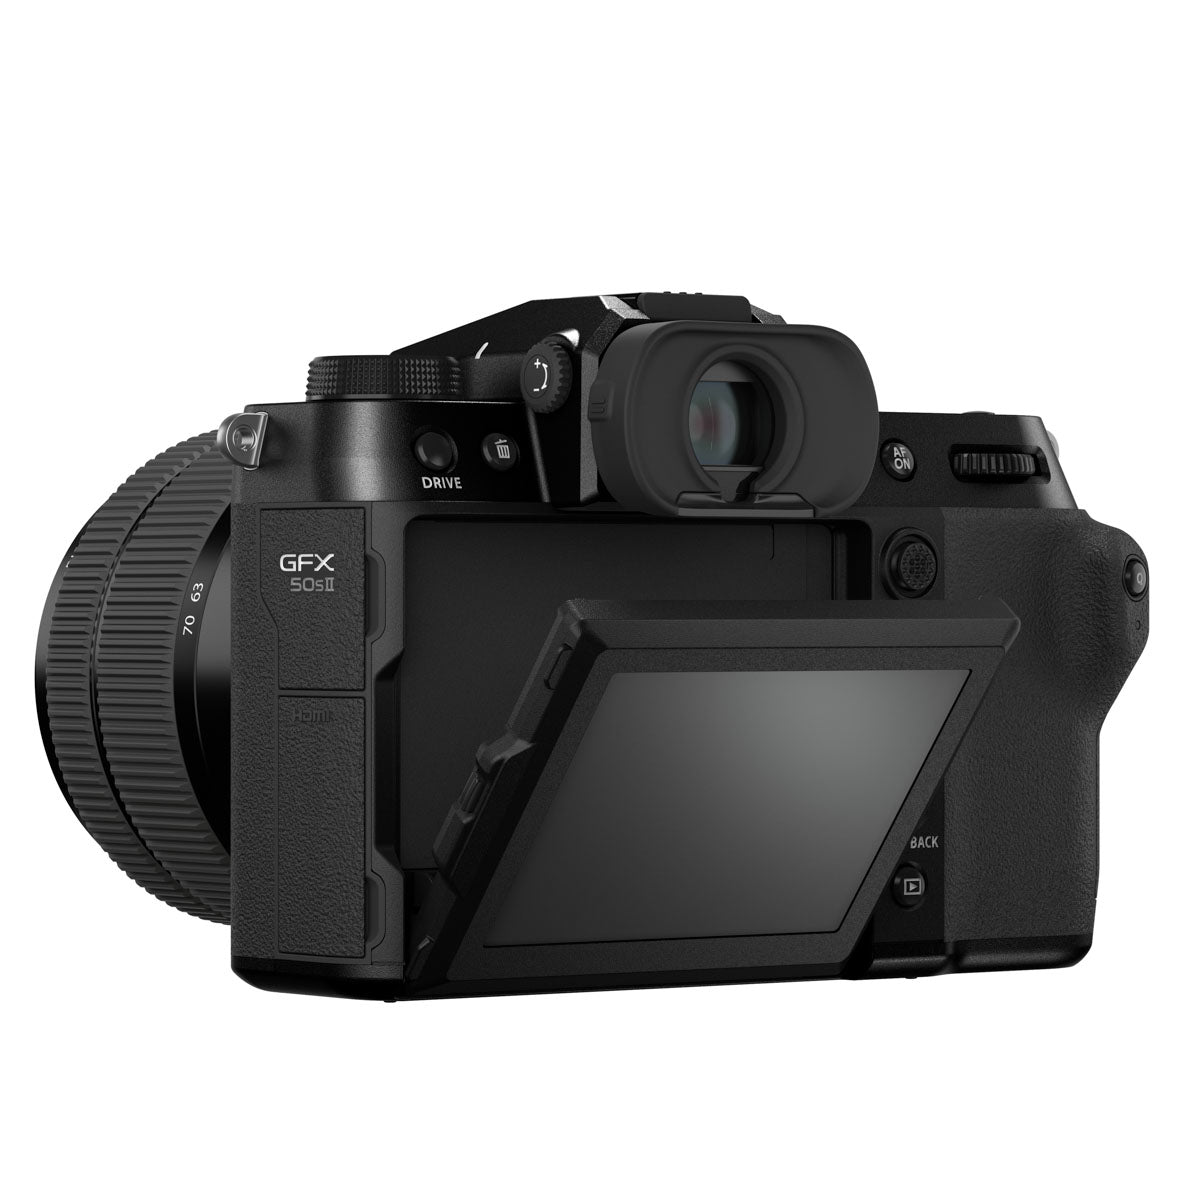 Fujifilm GFX 50S II Medium Format Camera with 35-70mm Lens